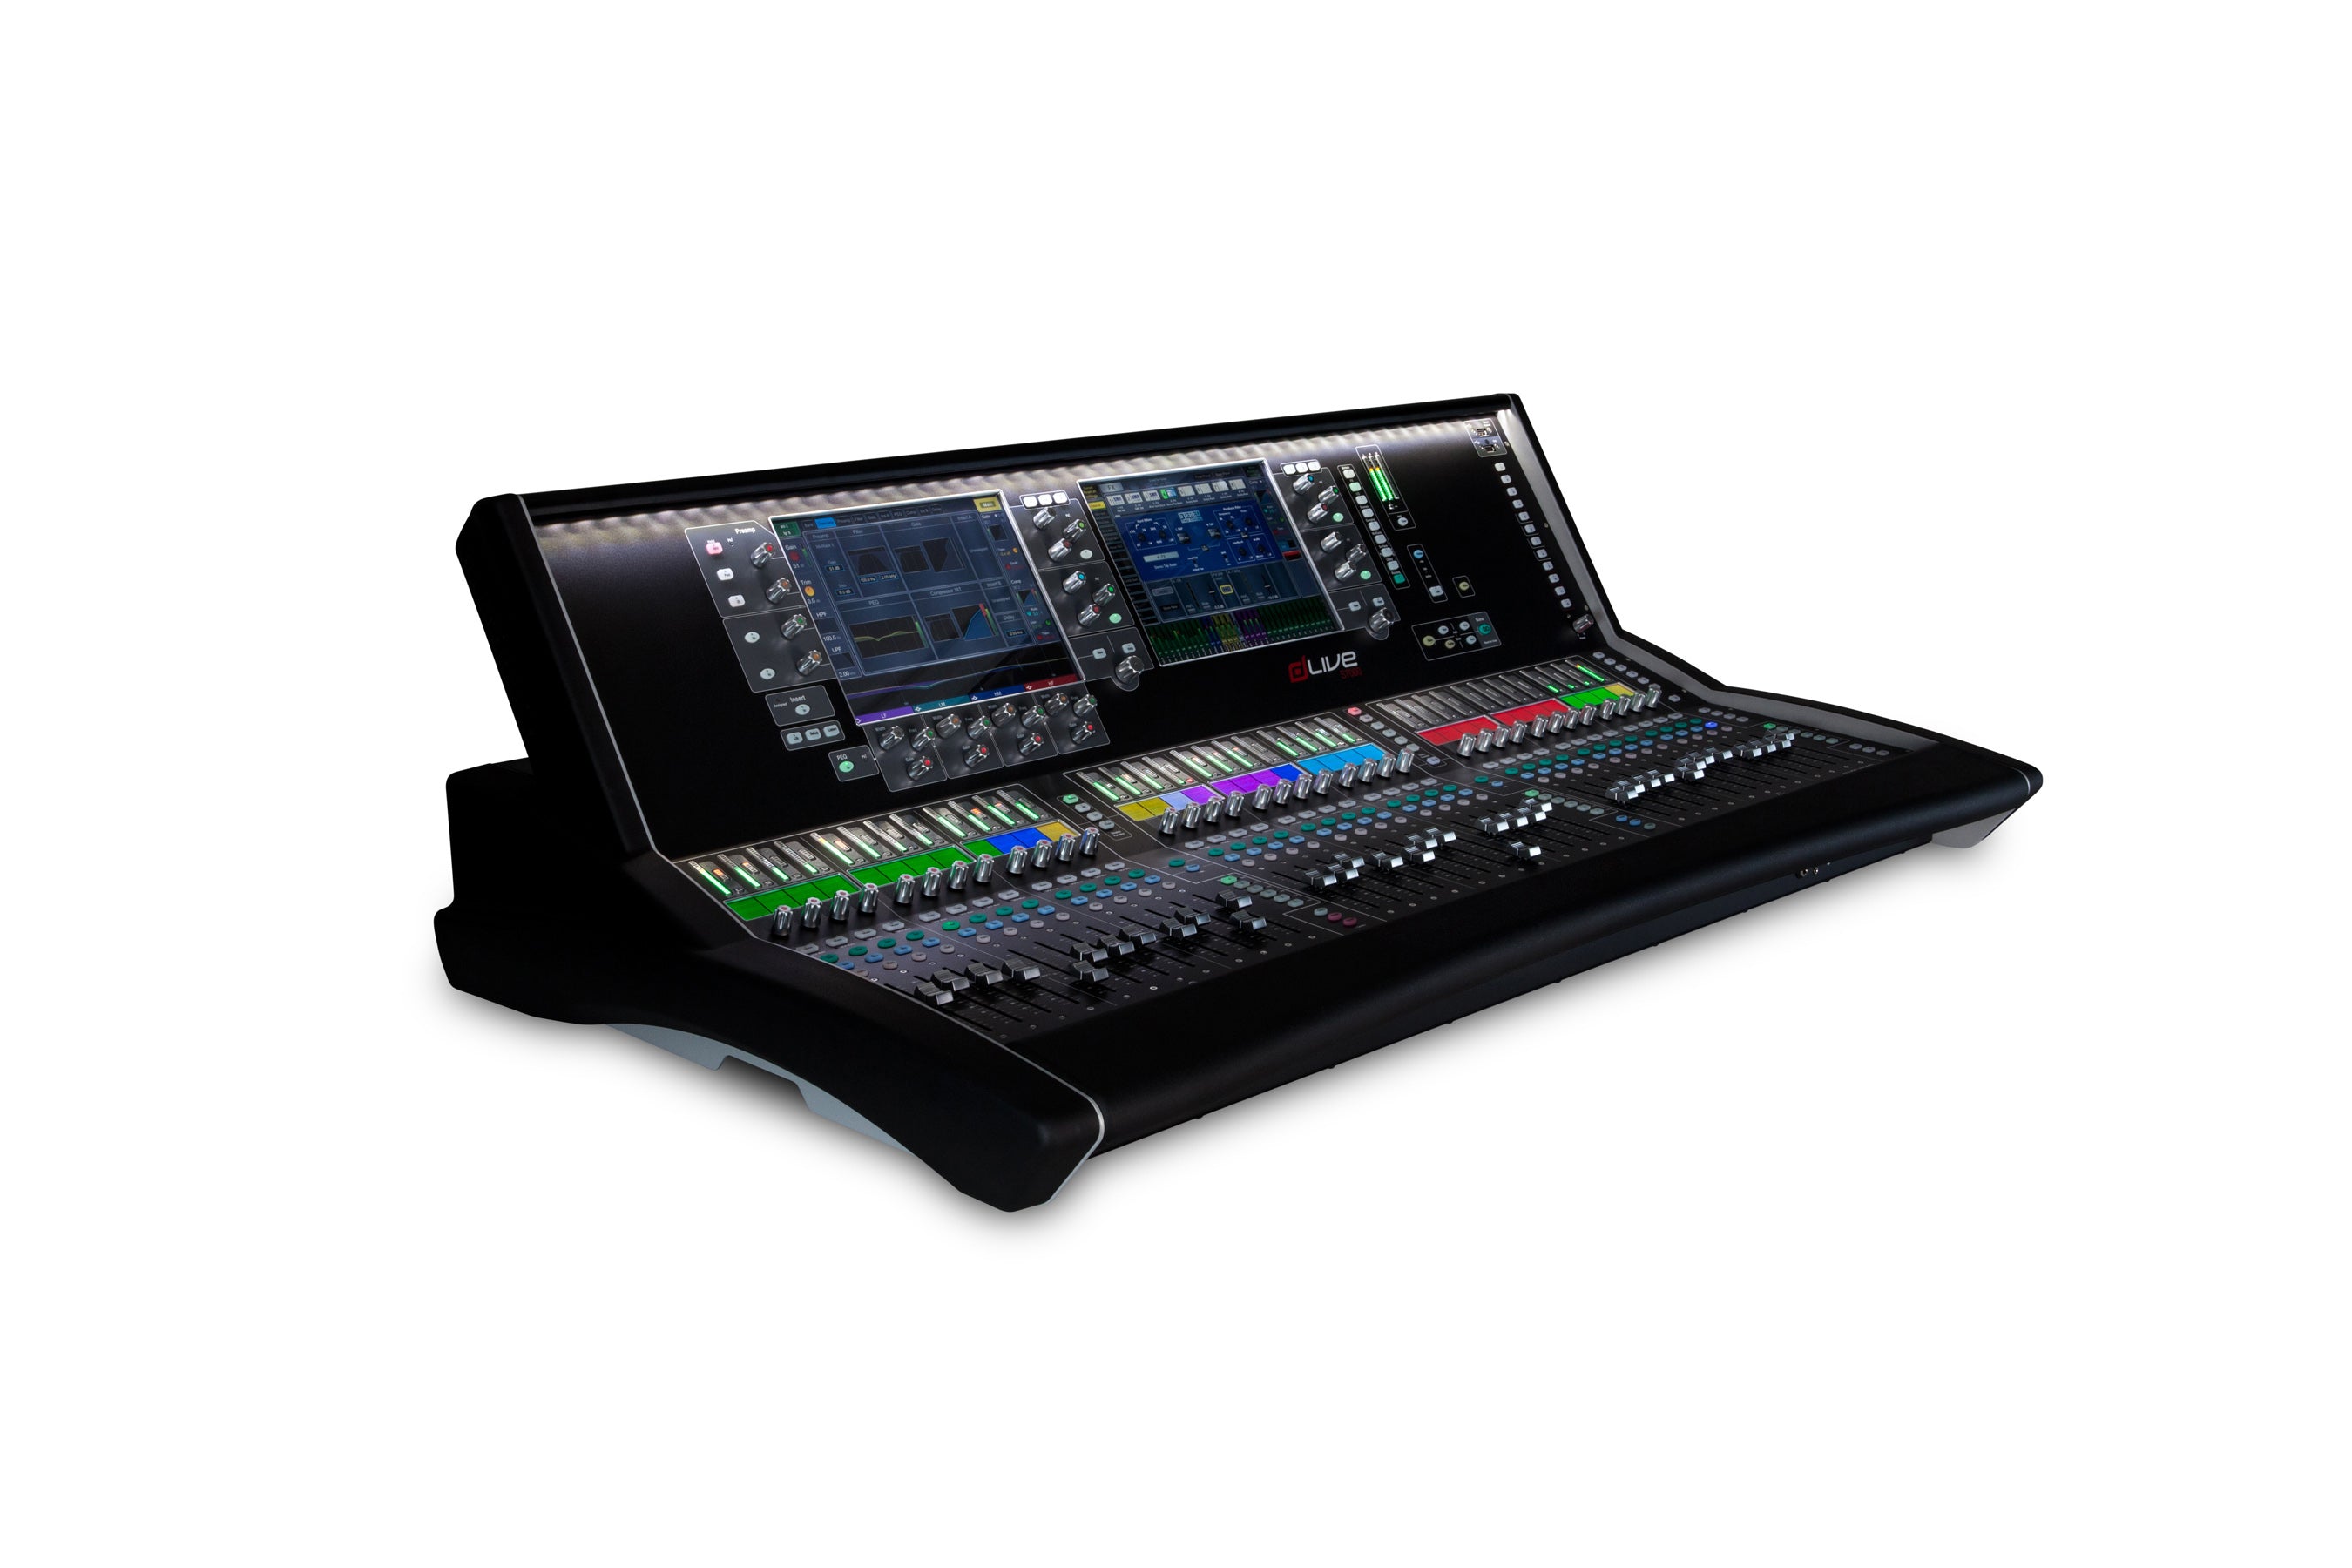 Allen & Heath | dLive S7000 Control Surface for MixRack